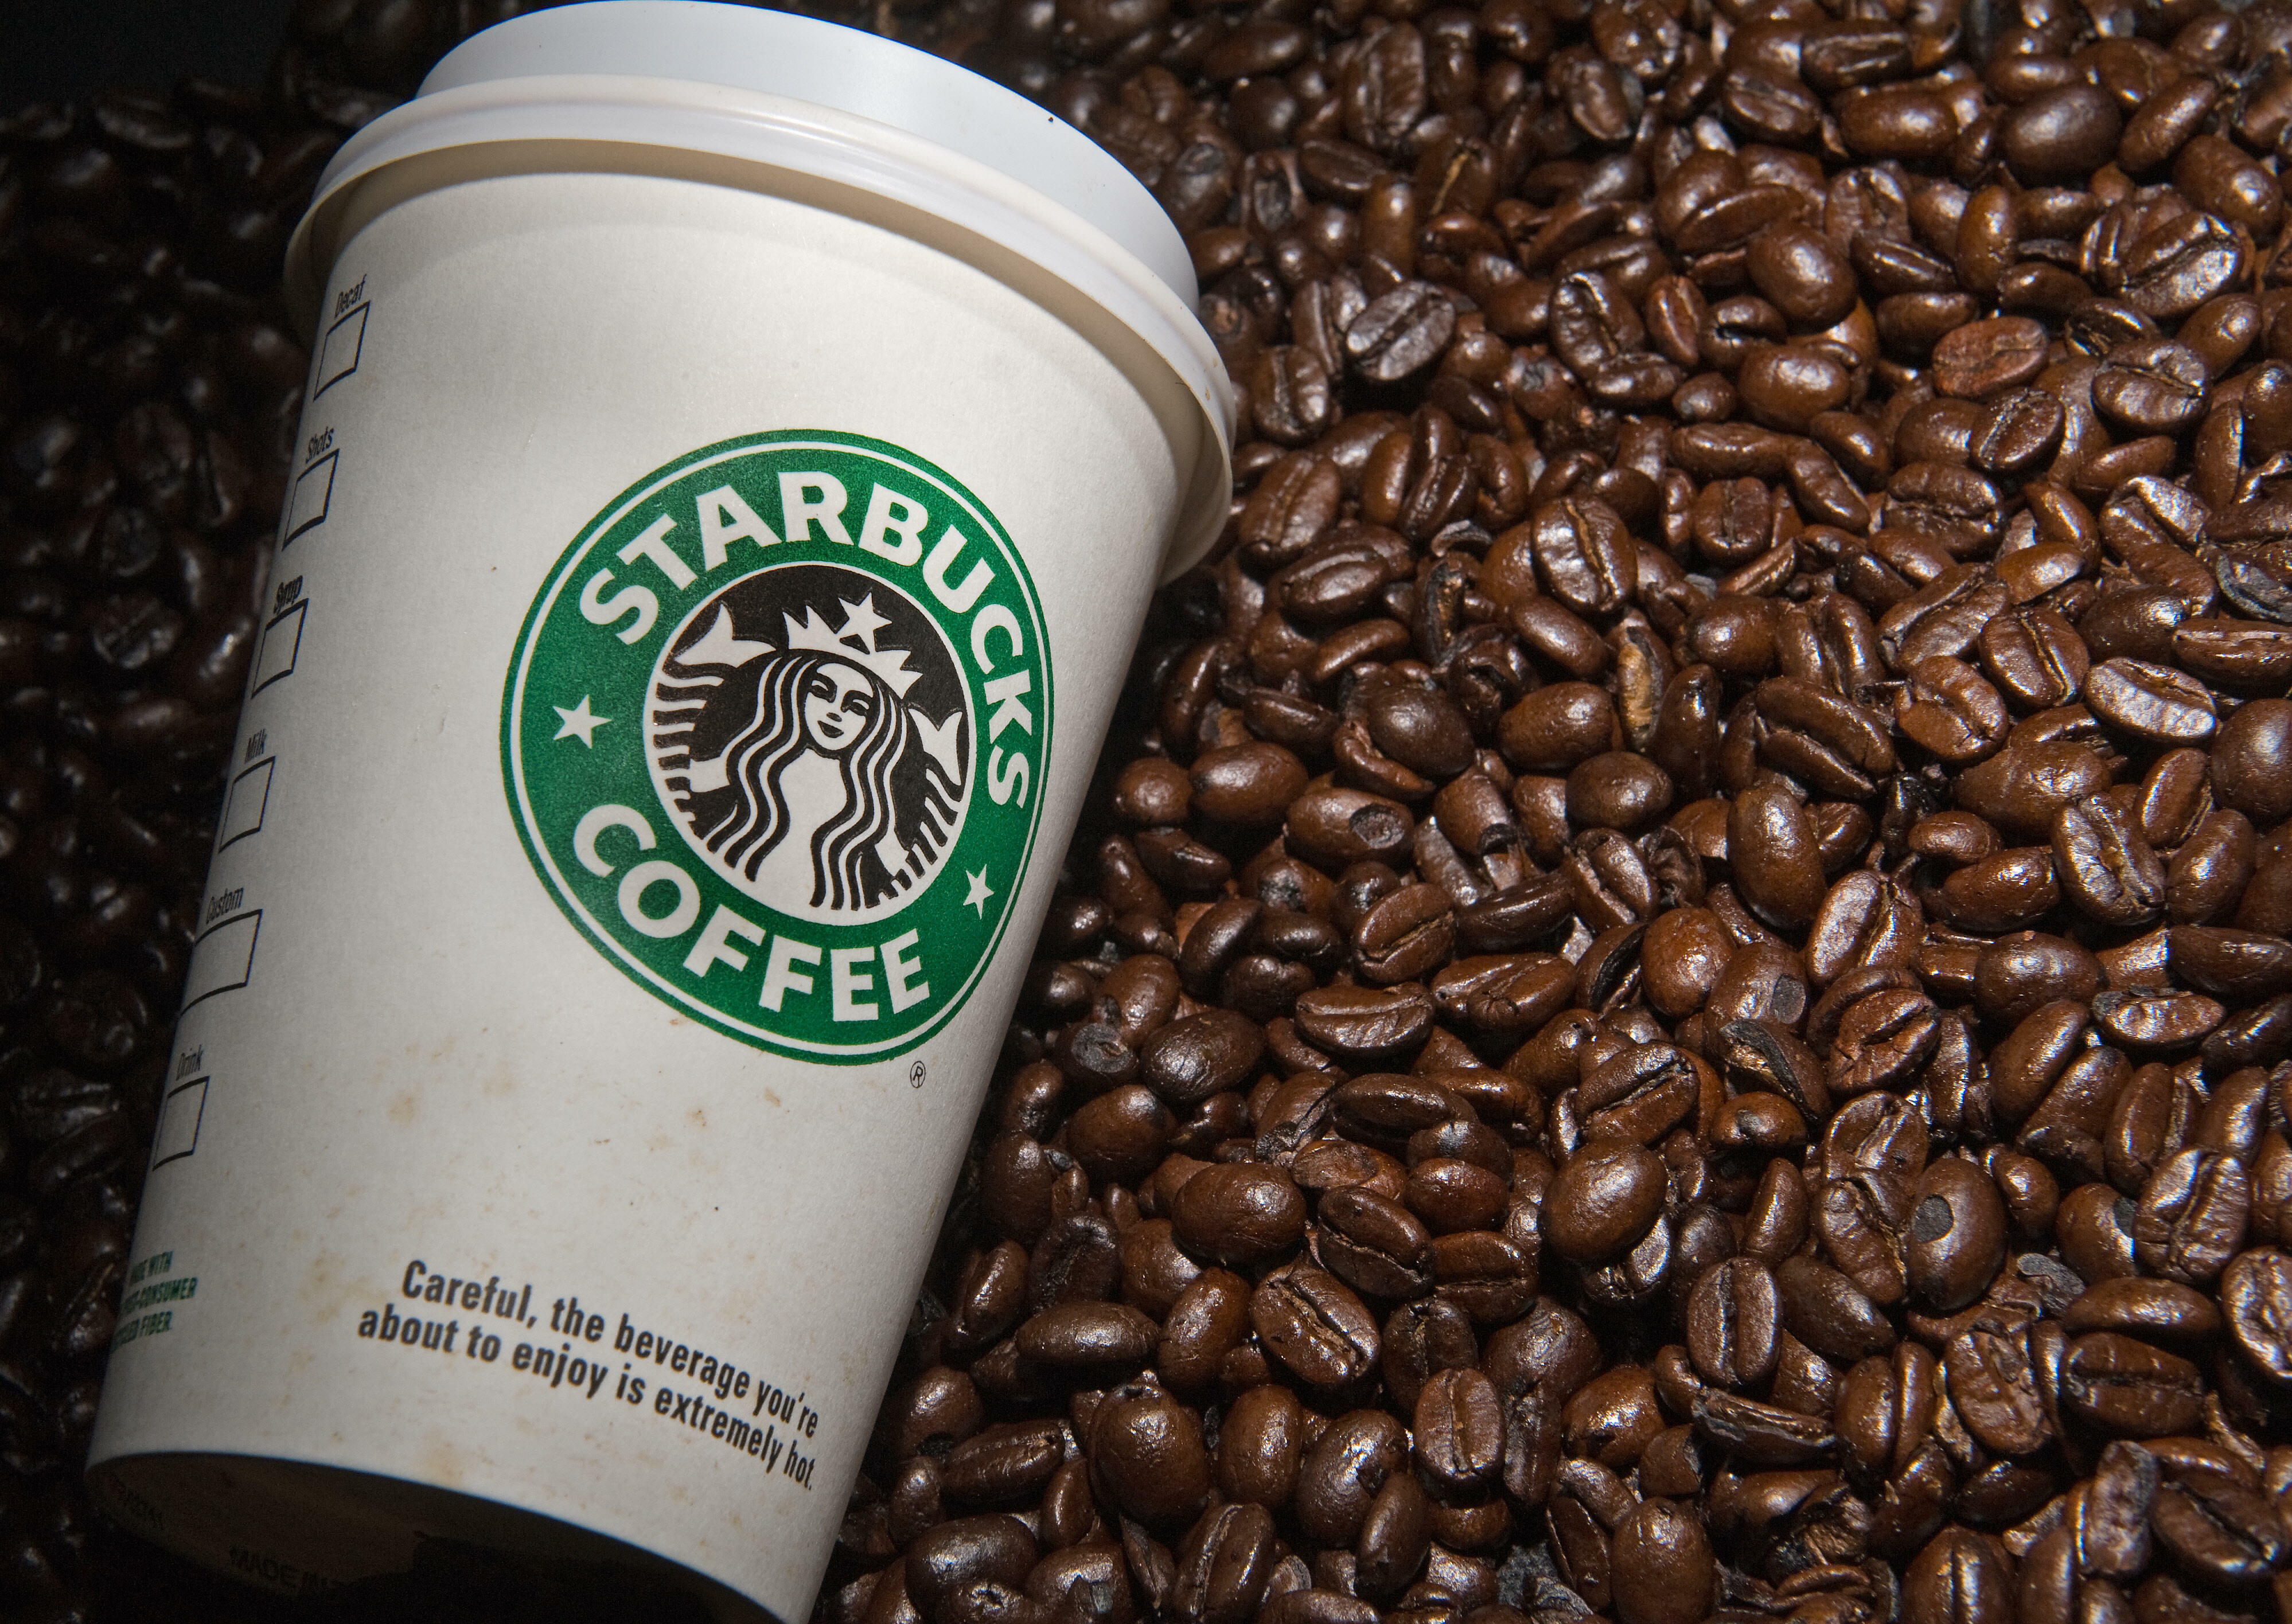 Кофейные фирмы. "Starbucks" кофе "oleato". Кофе фирма Старбакс. Старбакс кафе. Старбакс кофе кофейня.